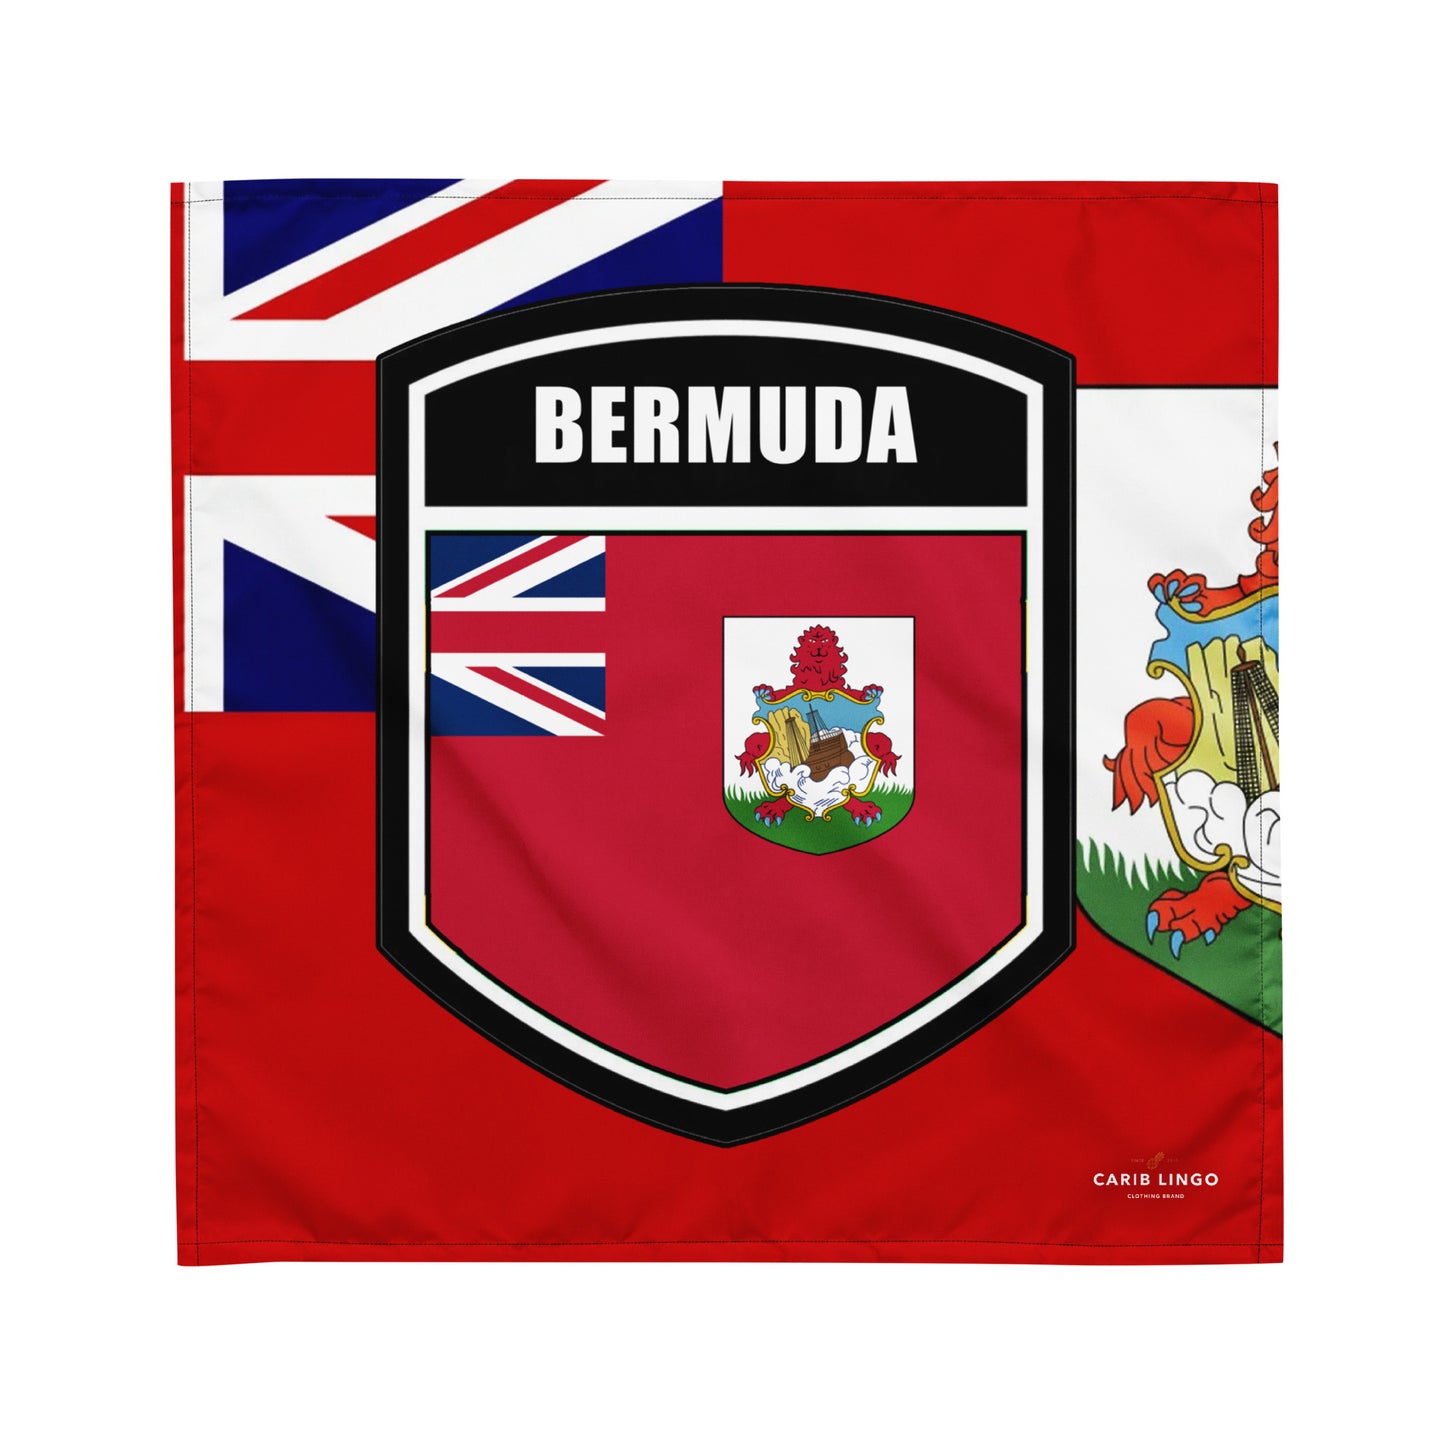 Bermuda bandana